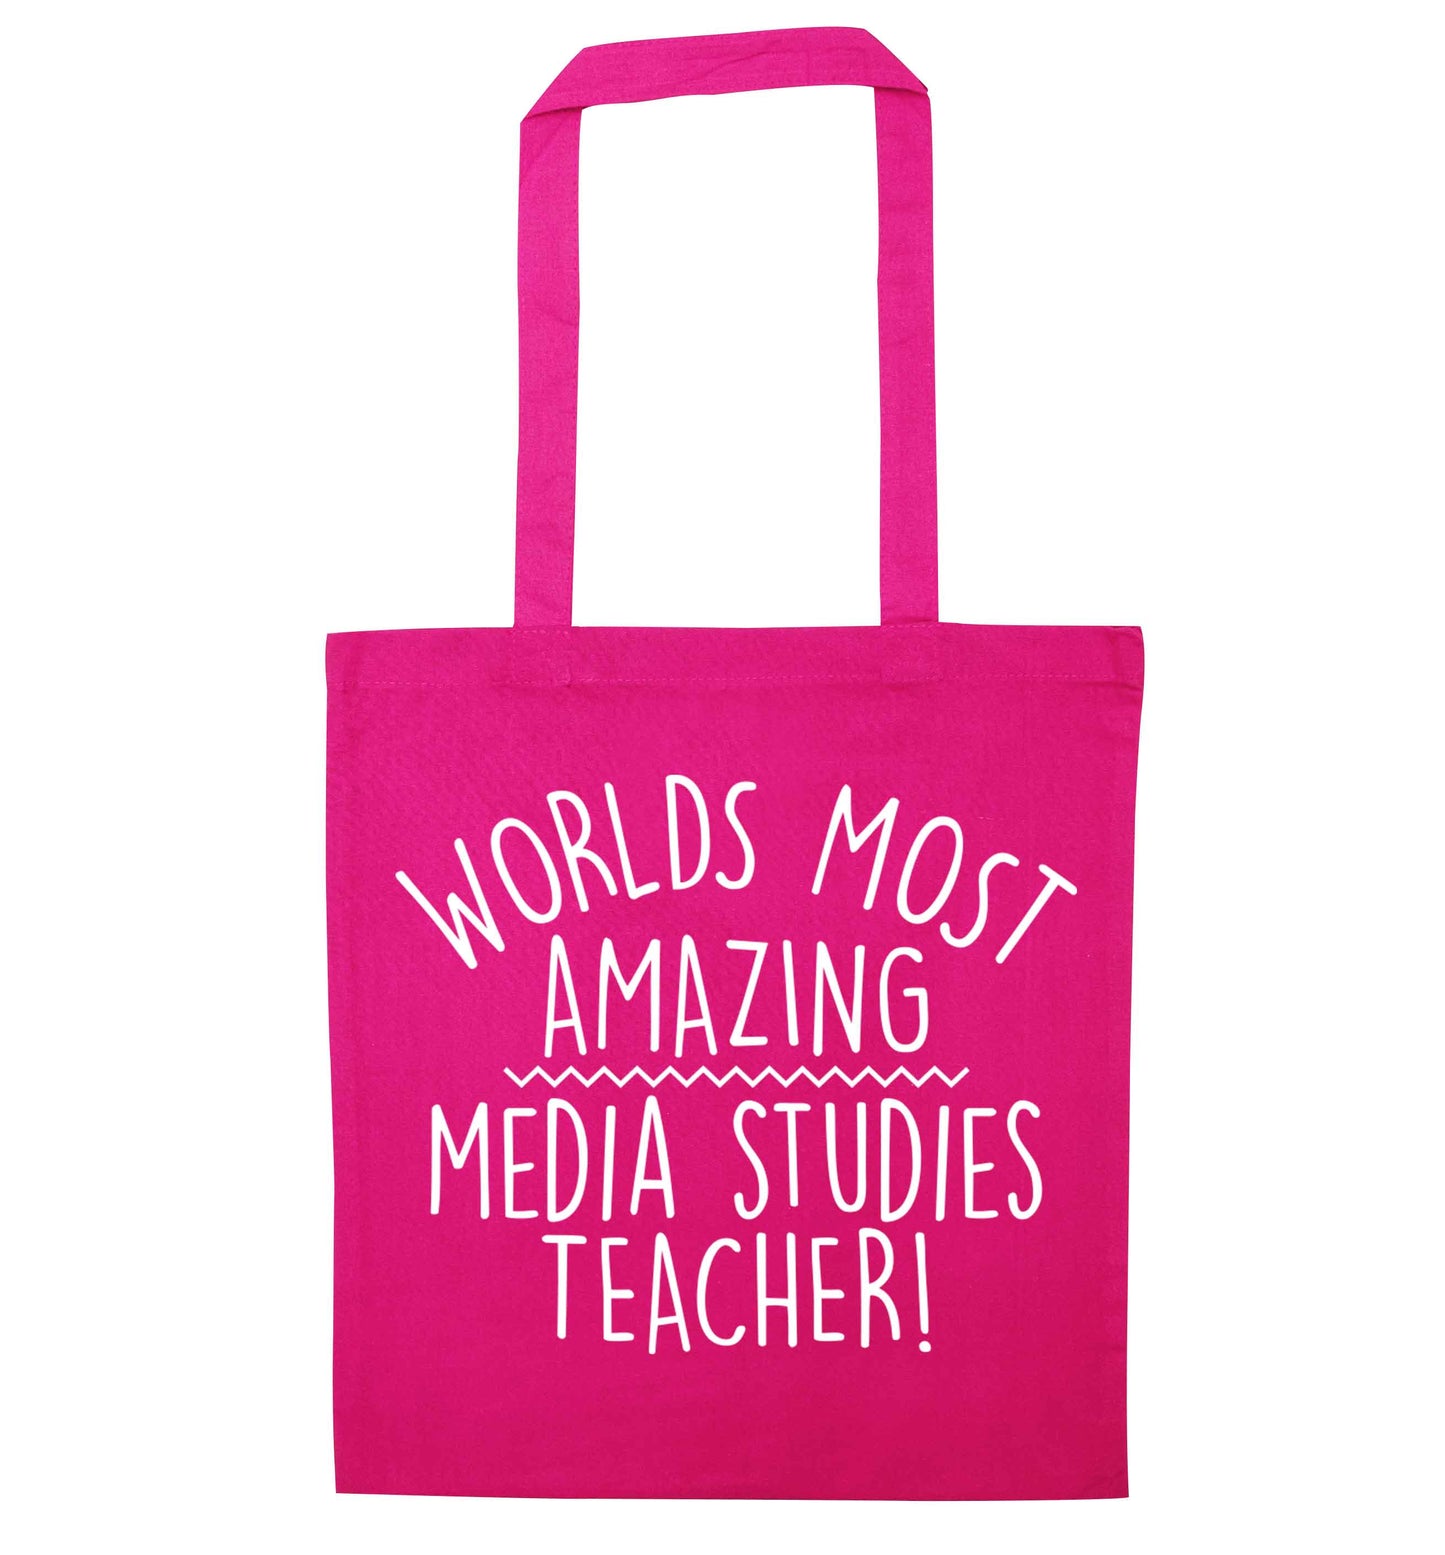 Worlds most amazing media studies teacher pink tote bag